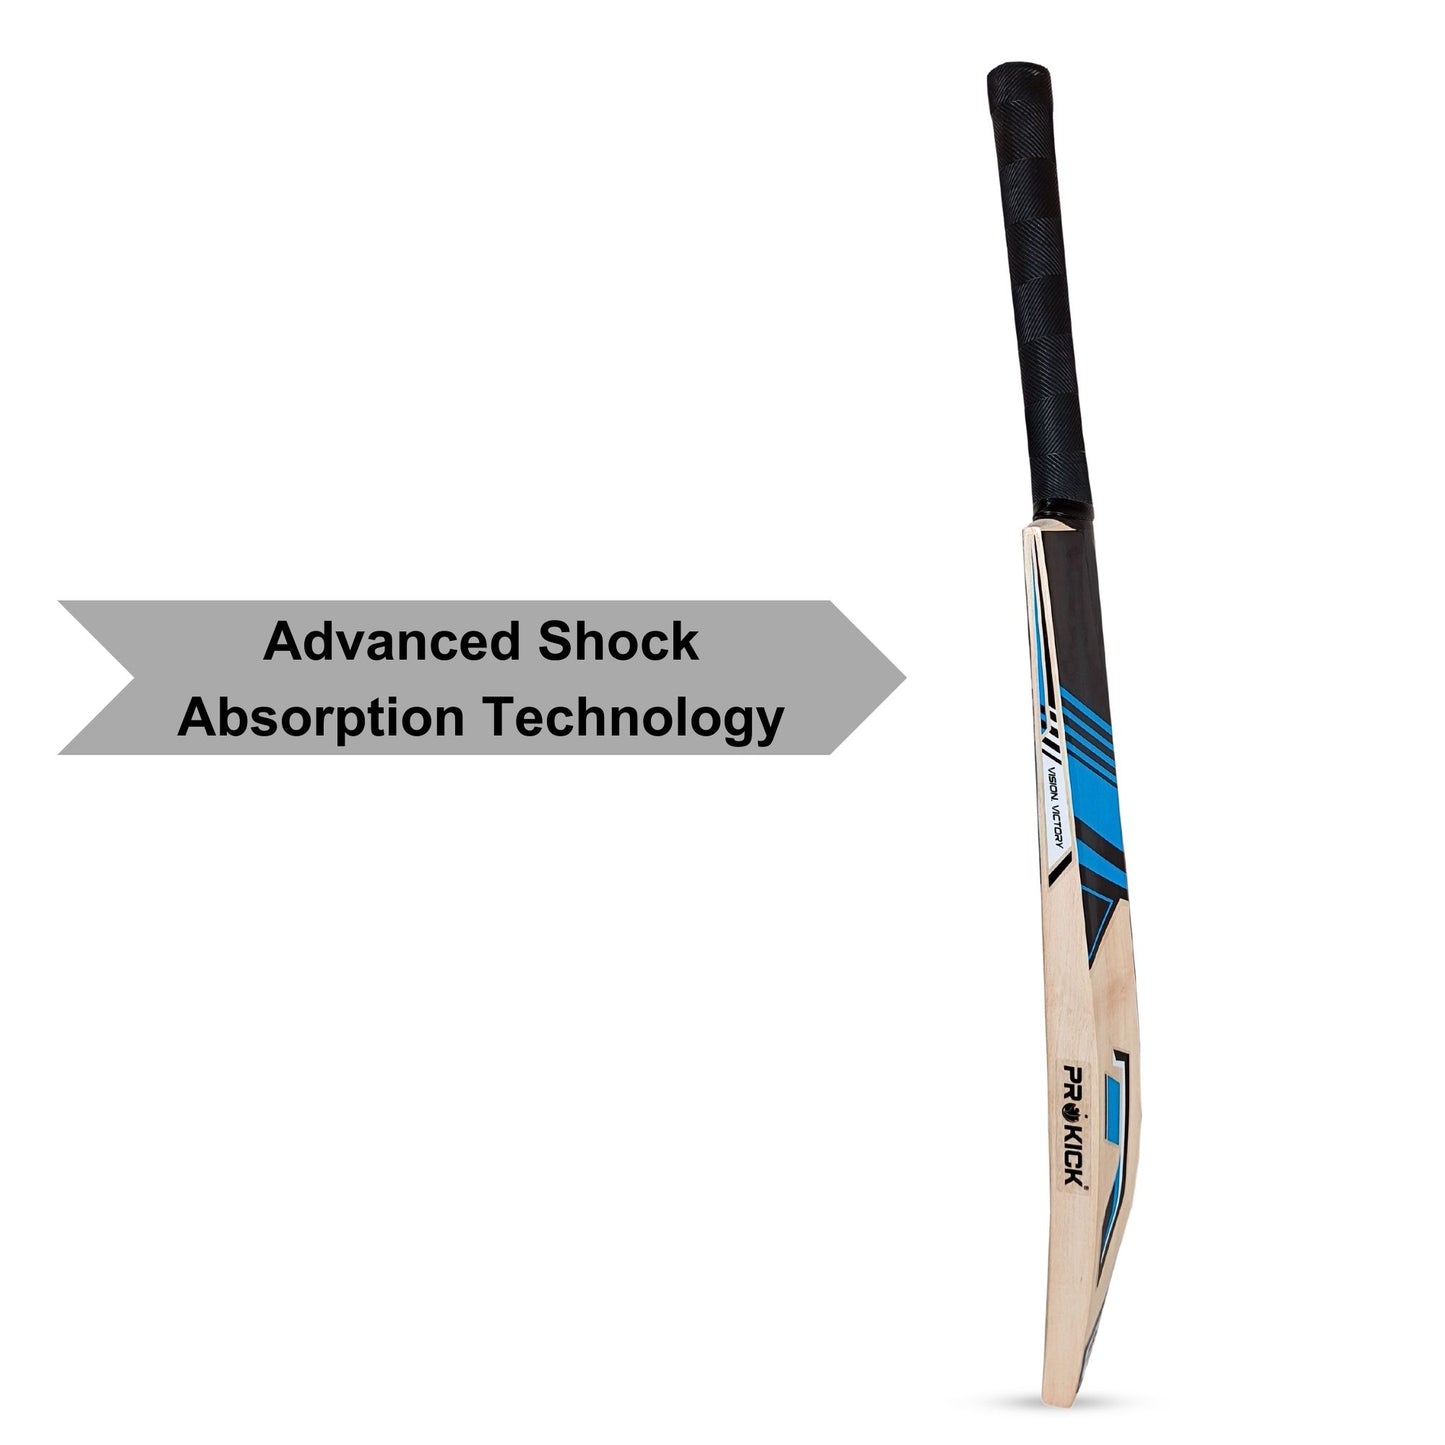 Prokick Stellar Kashmir Willow Cricket Bat - Best Price online Prokicksports.com